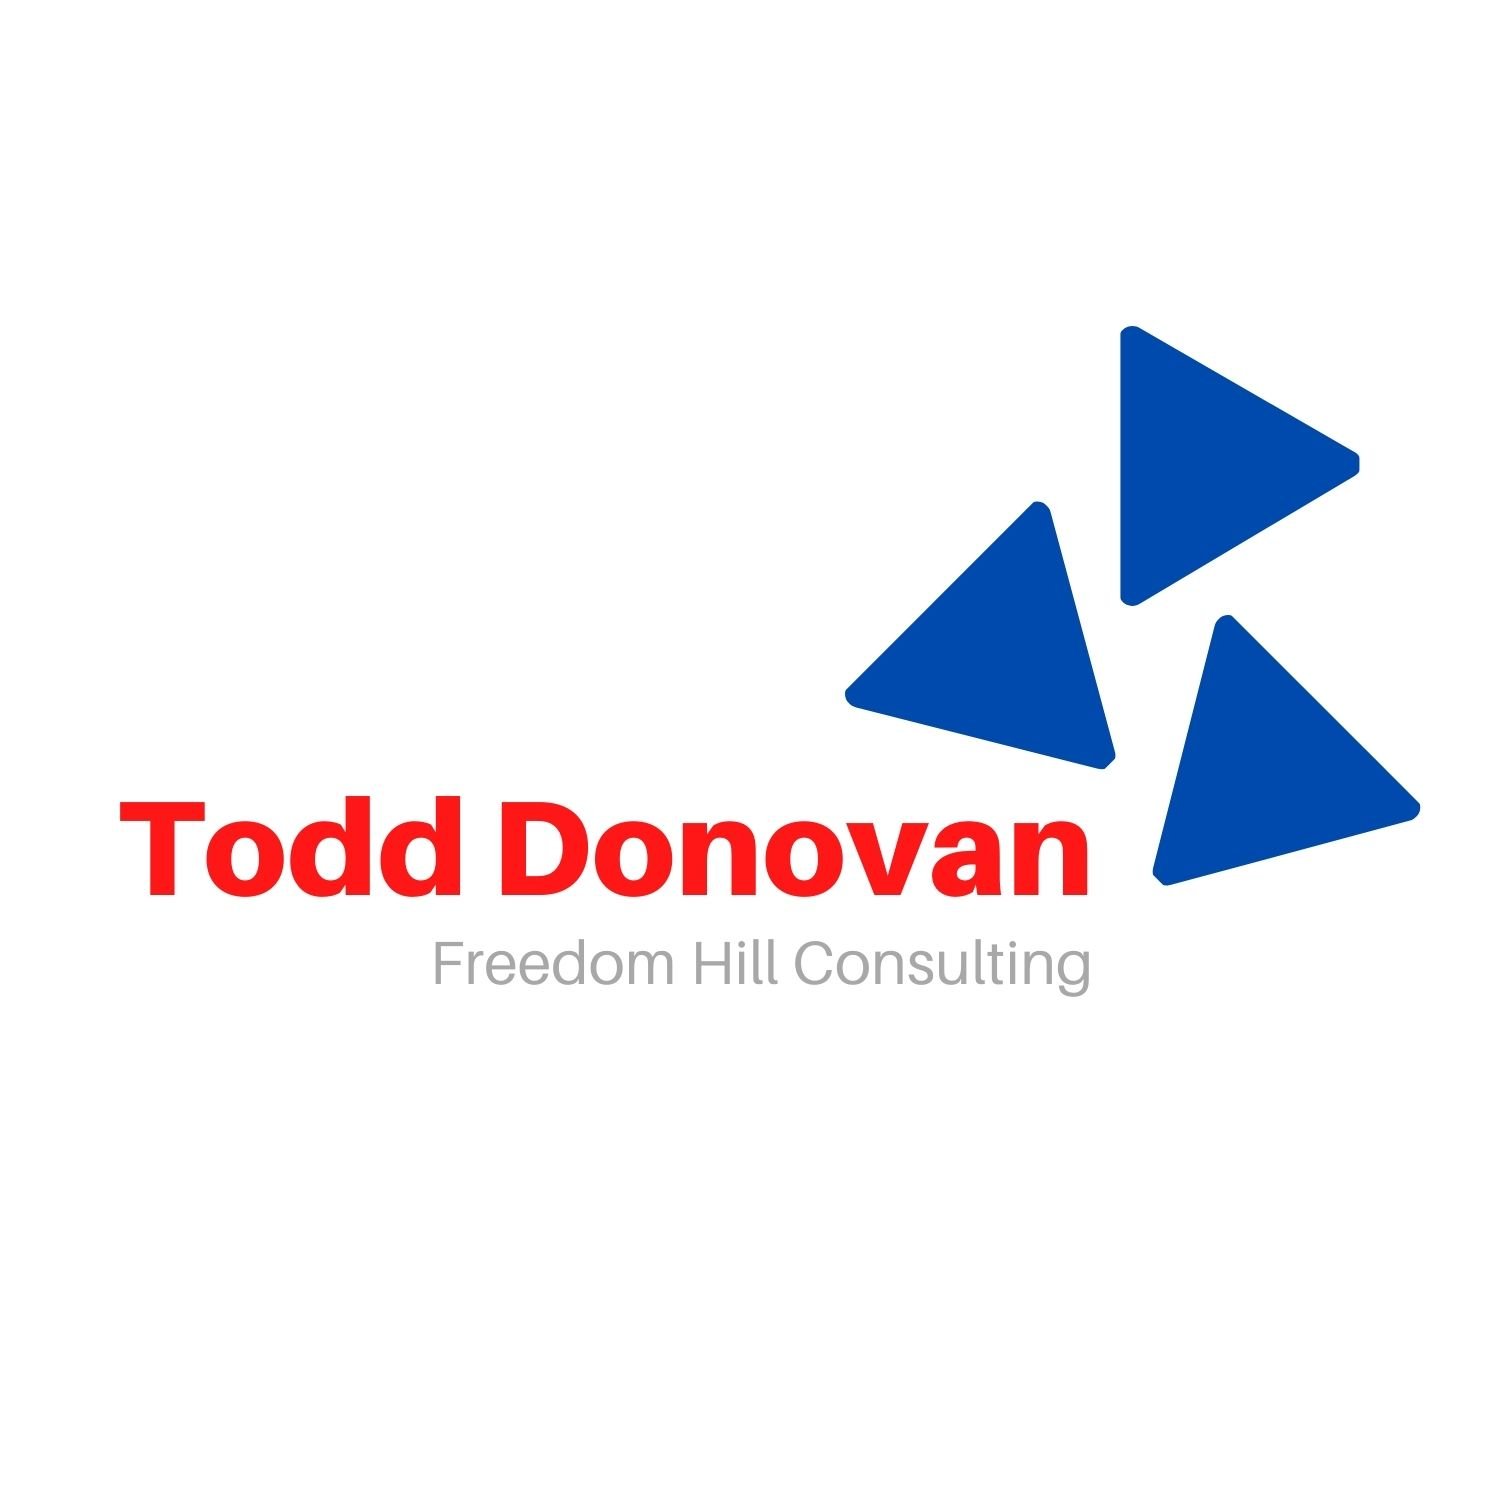 Todd Donovan, ImageTrend Elite Expert